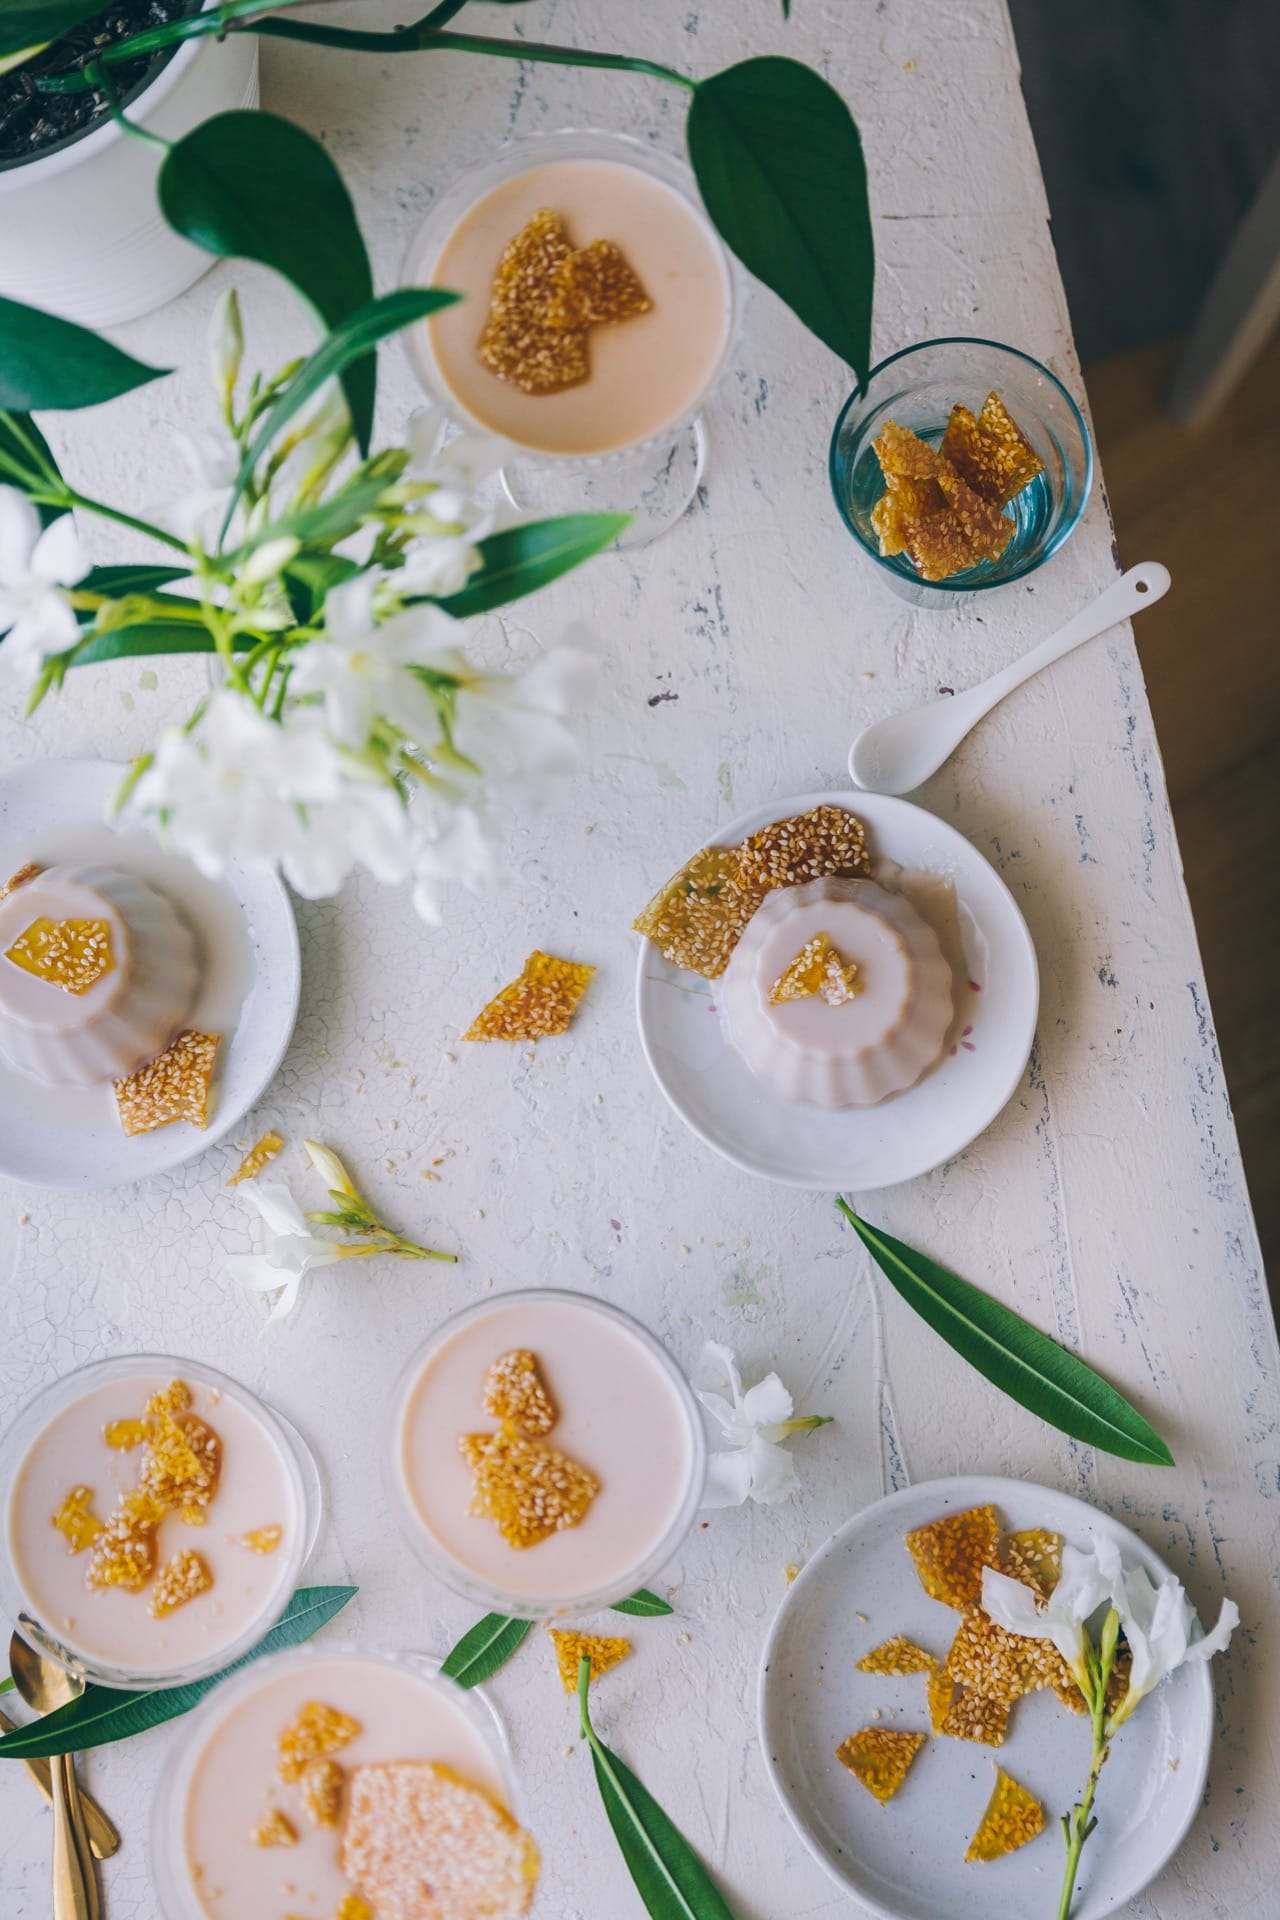 Salted Caramel Panna Cotta | Playful Cooking #caramel #pannacotta #eggless #foodphotography #foodstyling #dessert